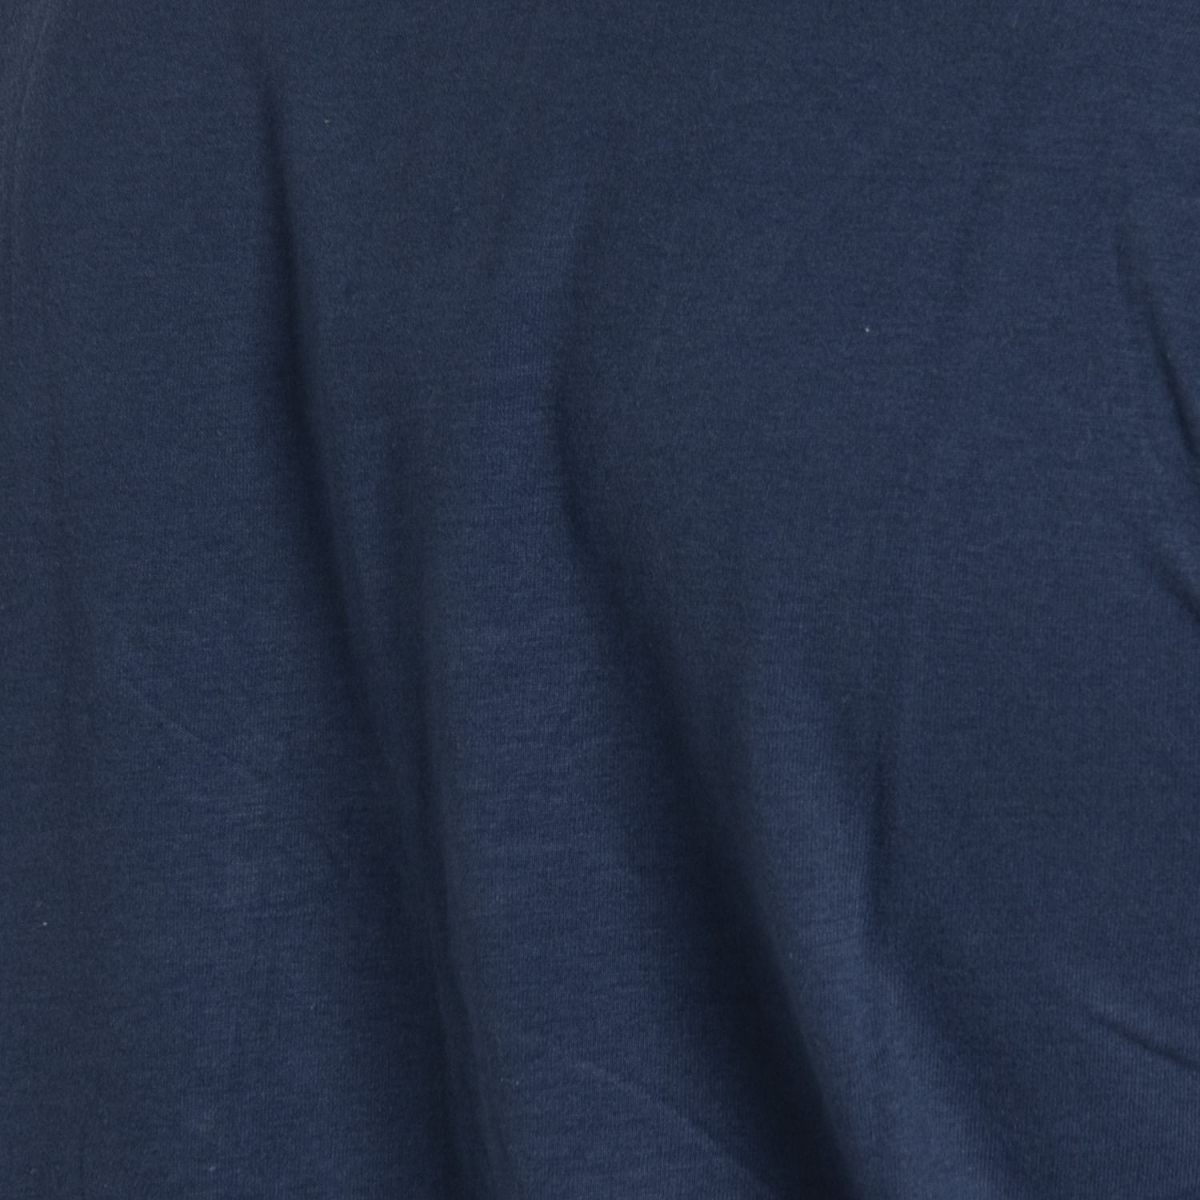 ropa Camiseta hombre T-Shirt LPX16-38 LANDEK PARK Cafedelmar Shop